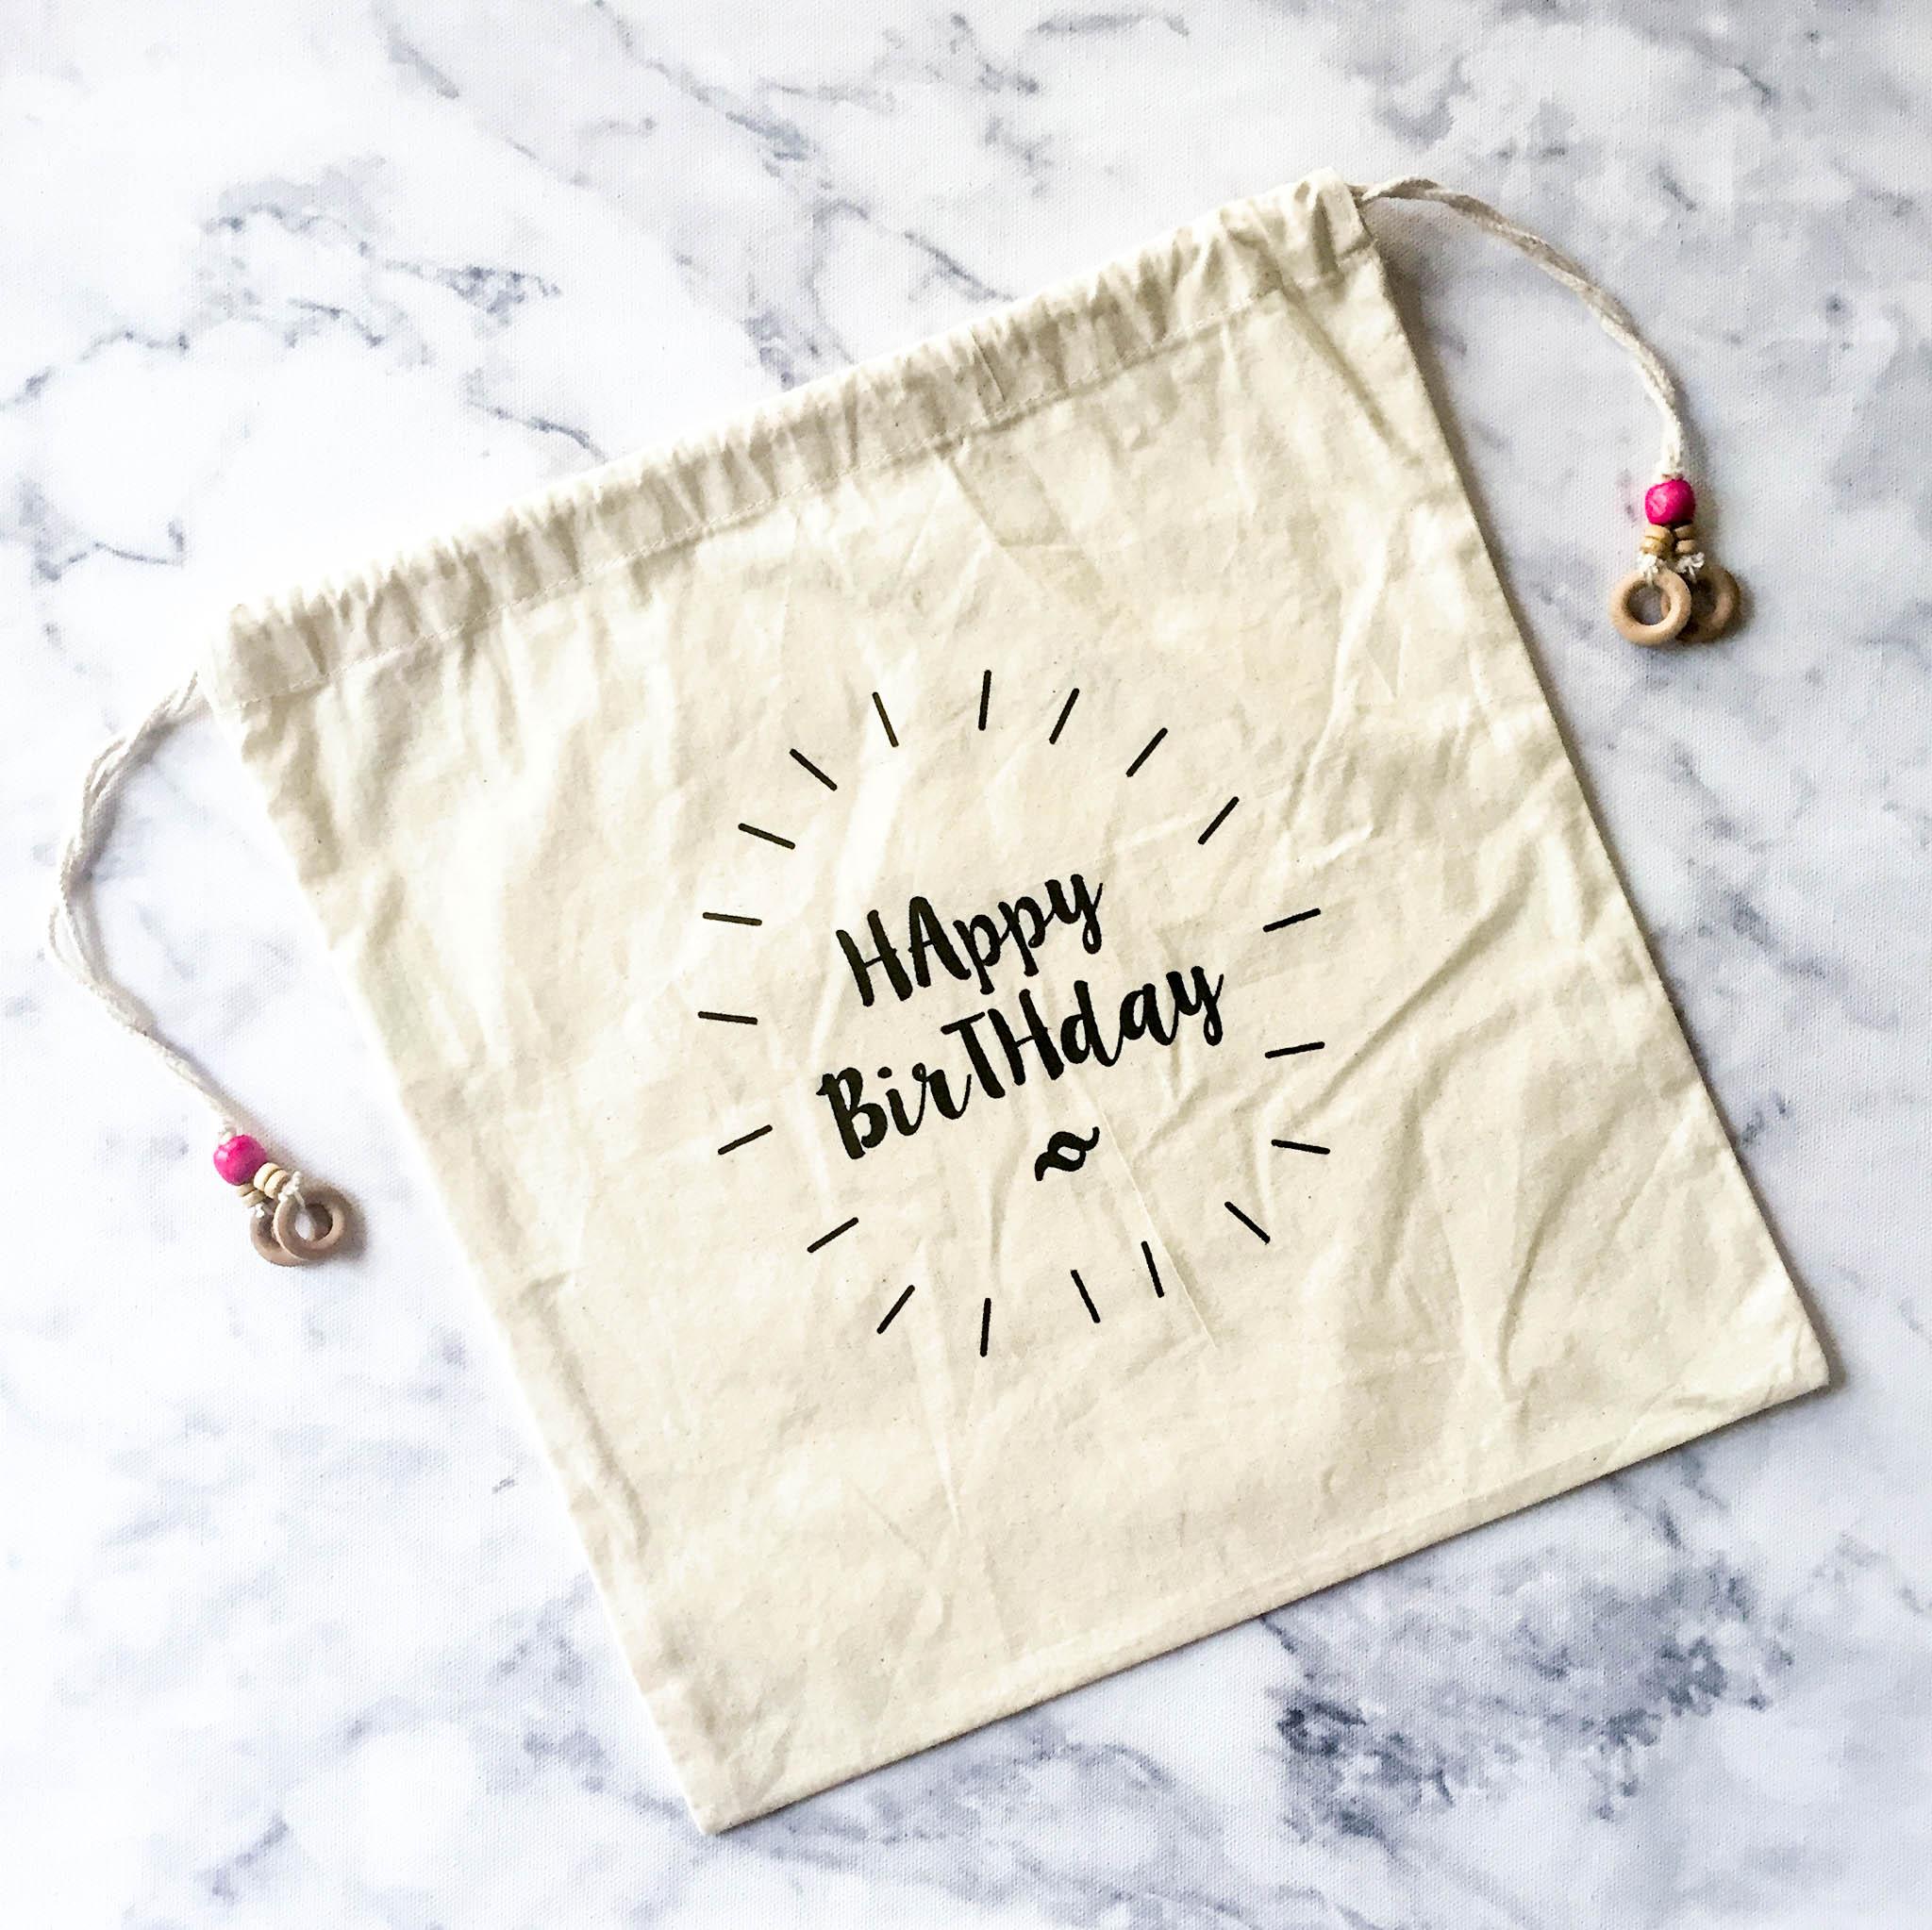 HAPPY BIRTHDAY GIFT BAG - left-handesign